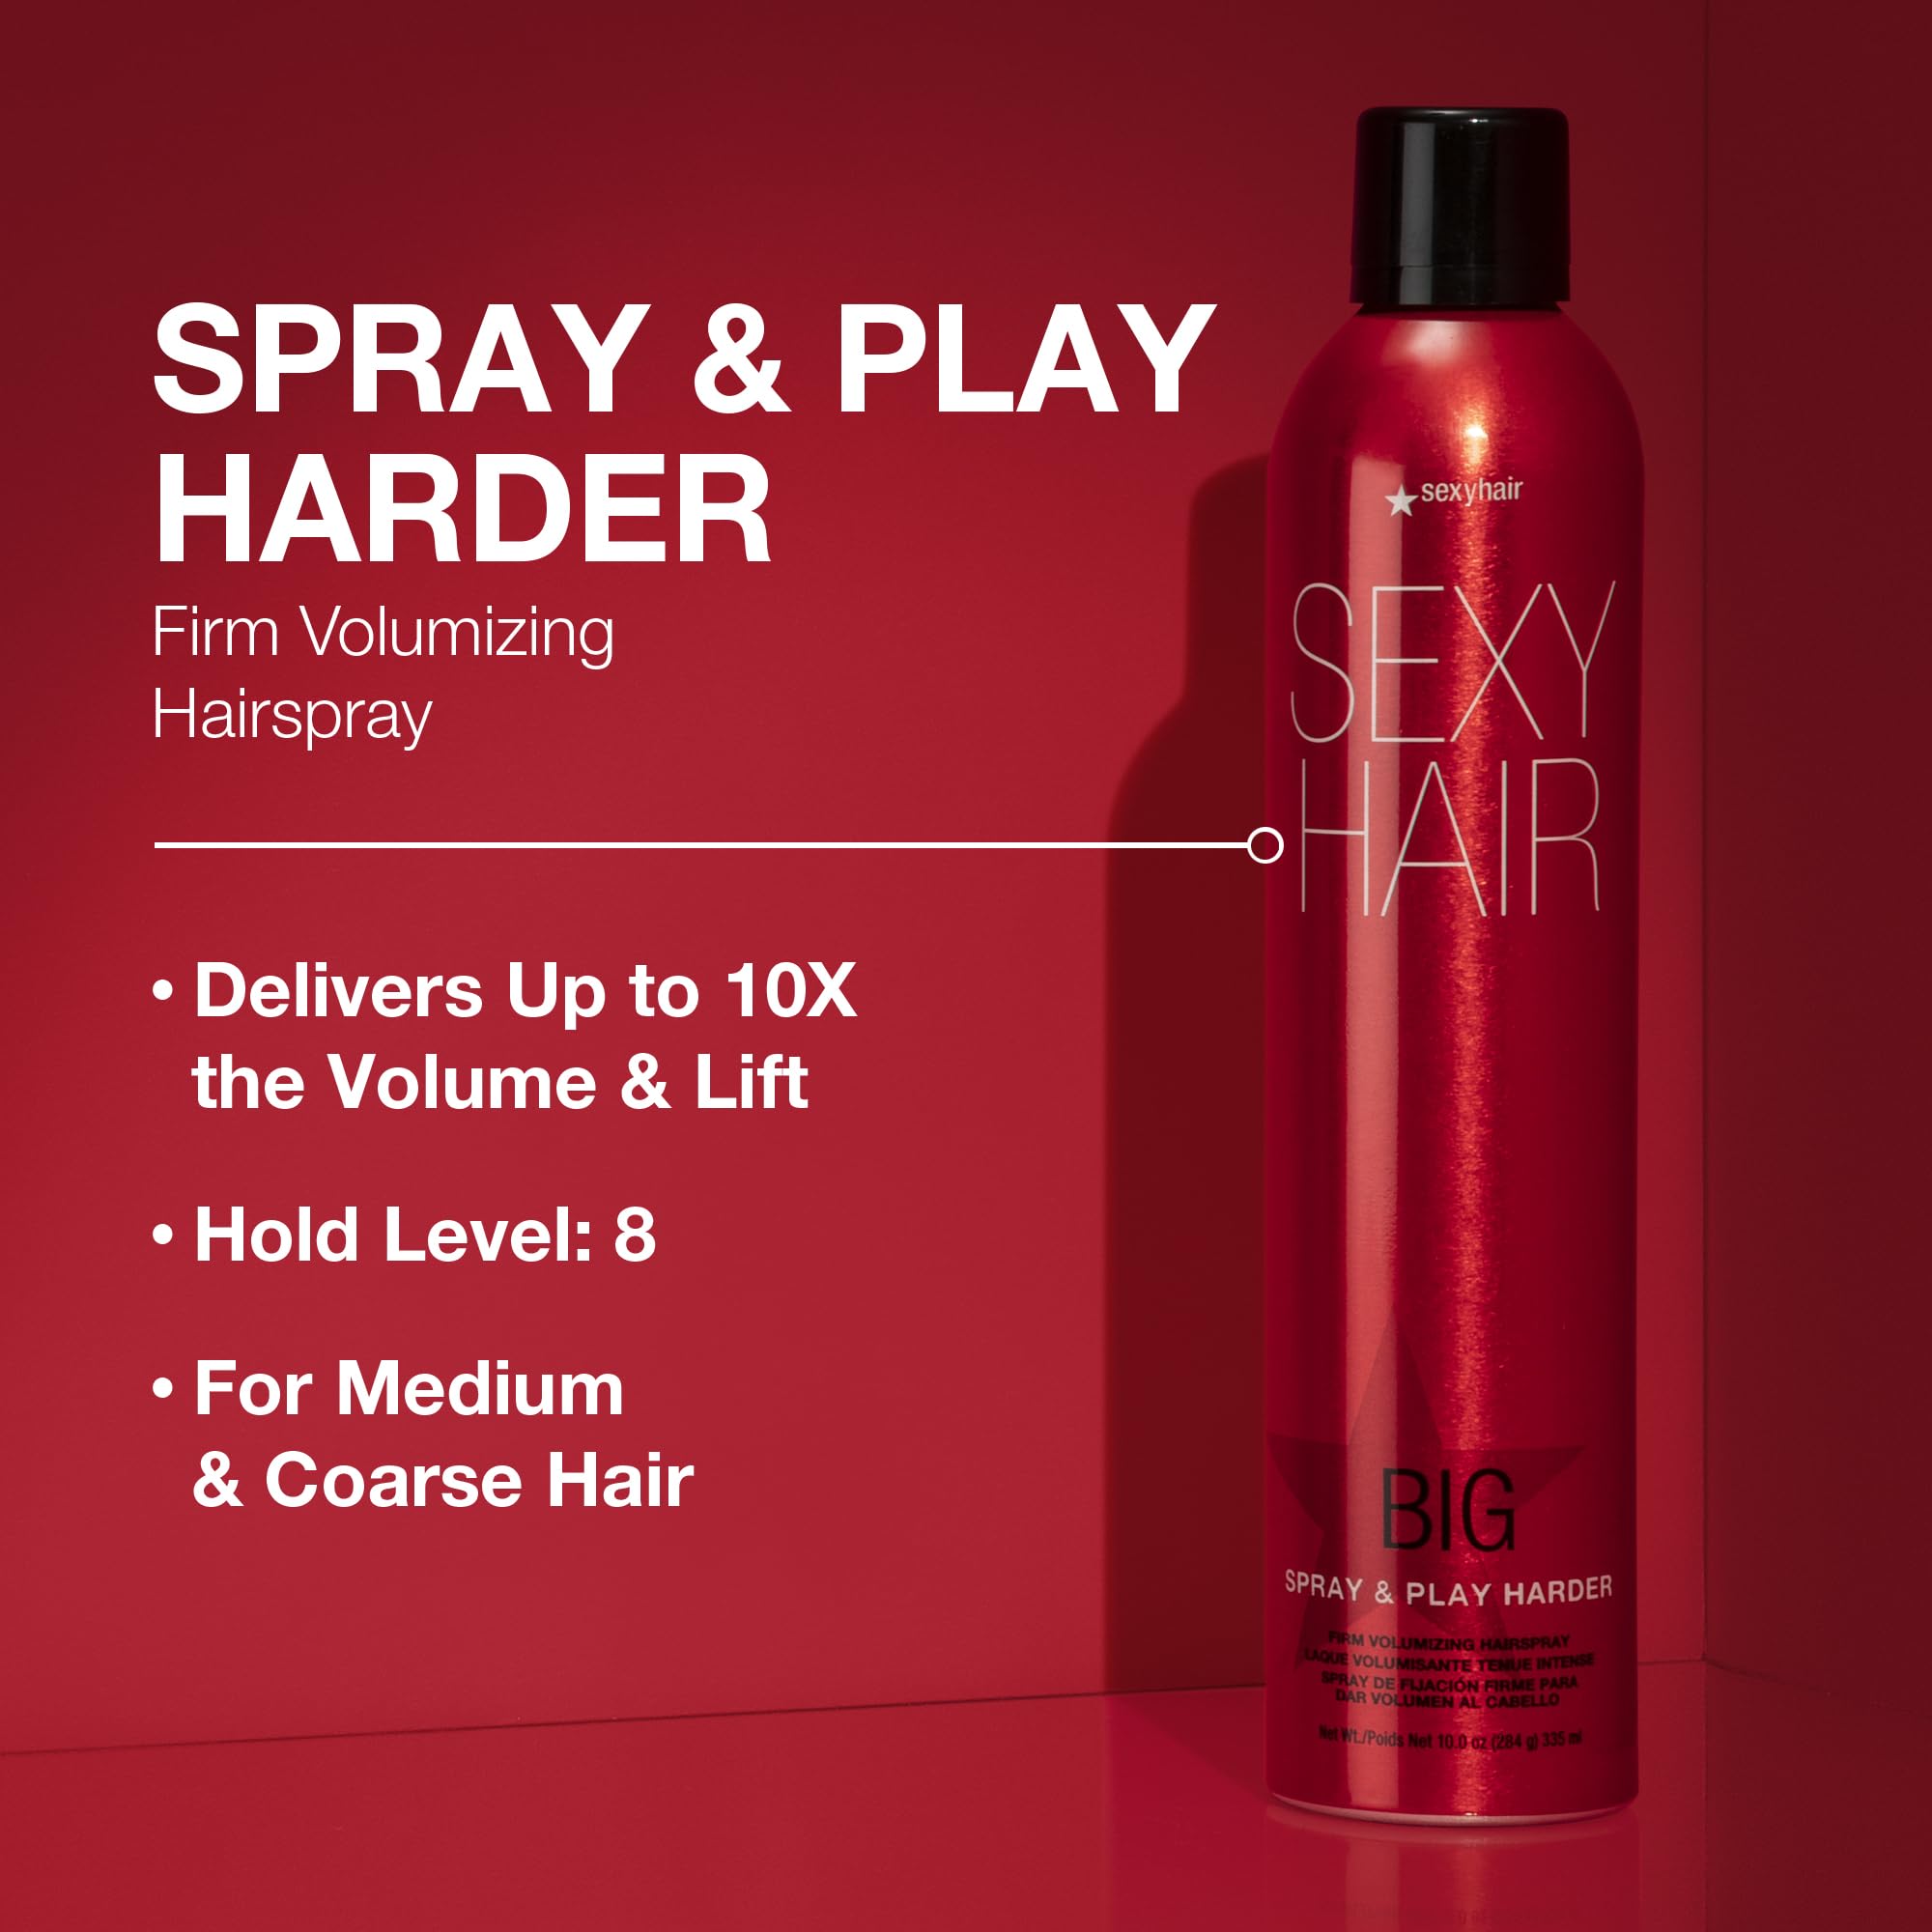 Sexy Hair Big SexyHair Spray & Play Harder Firm Volumizing Hairspray / 10